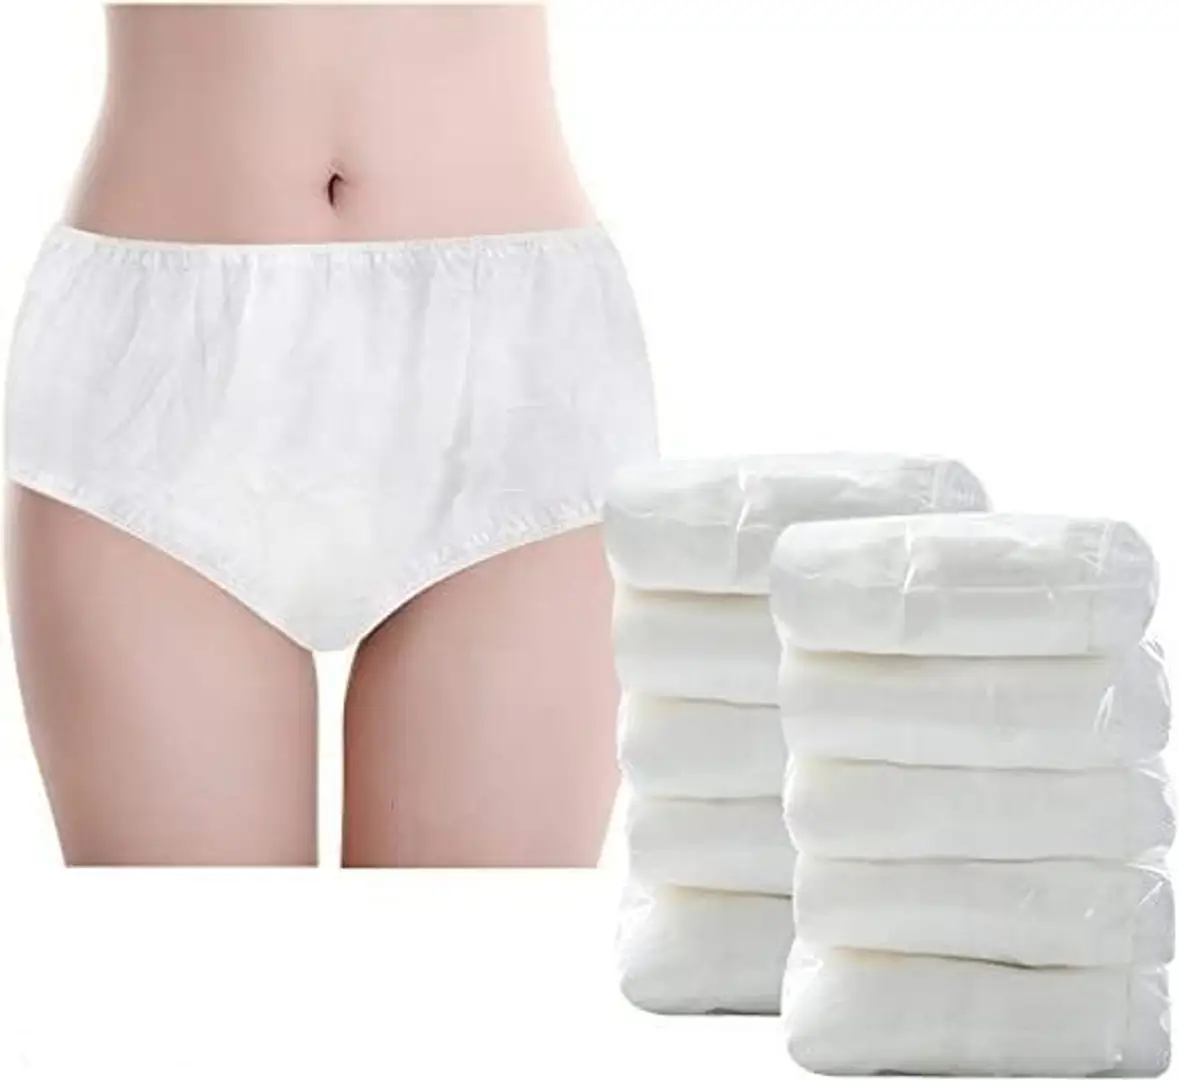 Buy Sassyvilla Disposable Panties for Women Travel Maternity